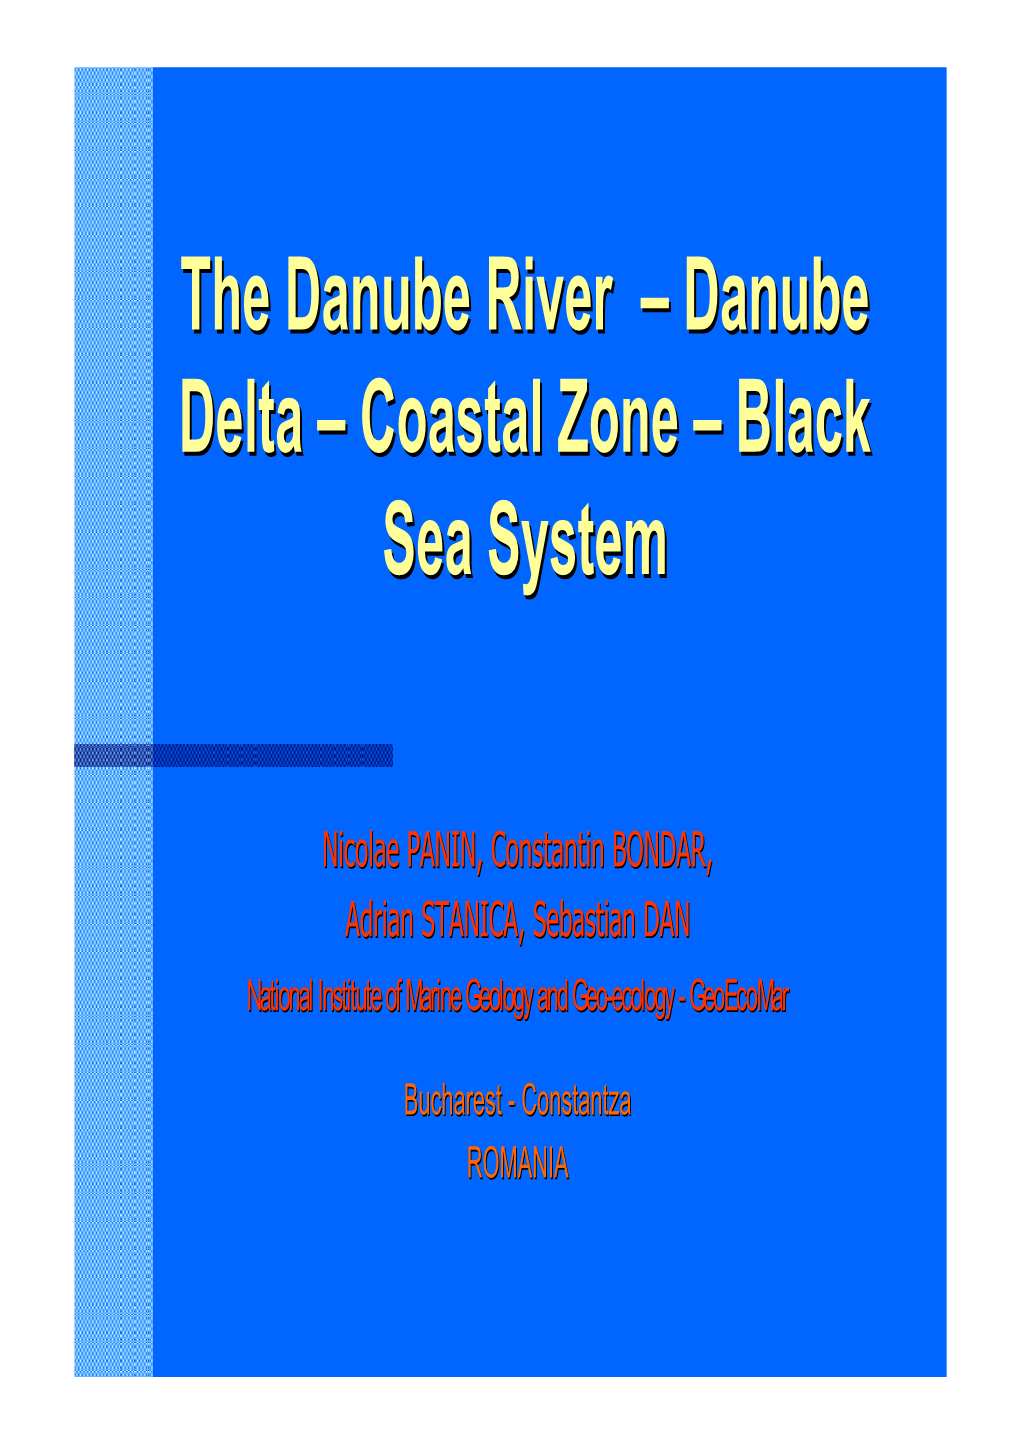 Danube Delta – Coastal Zone – Black Sea System